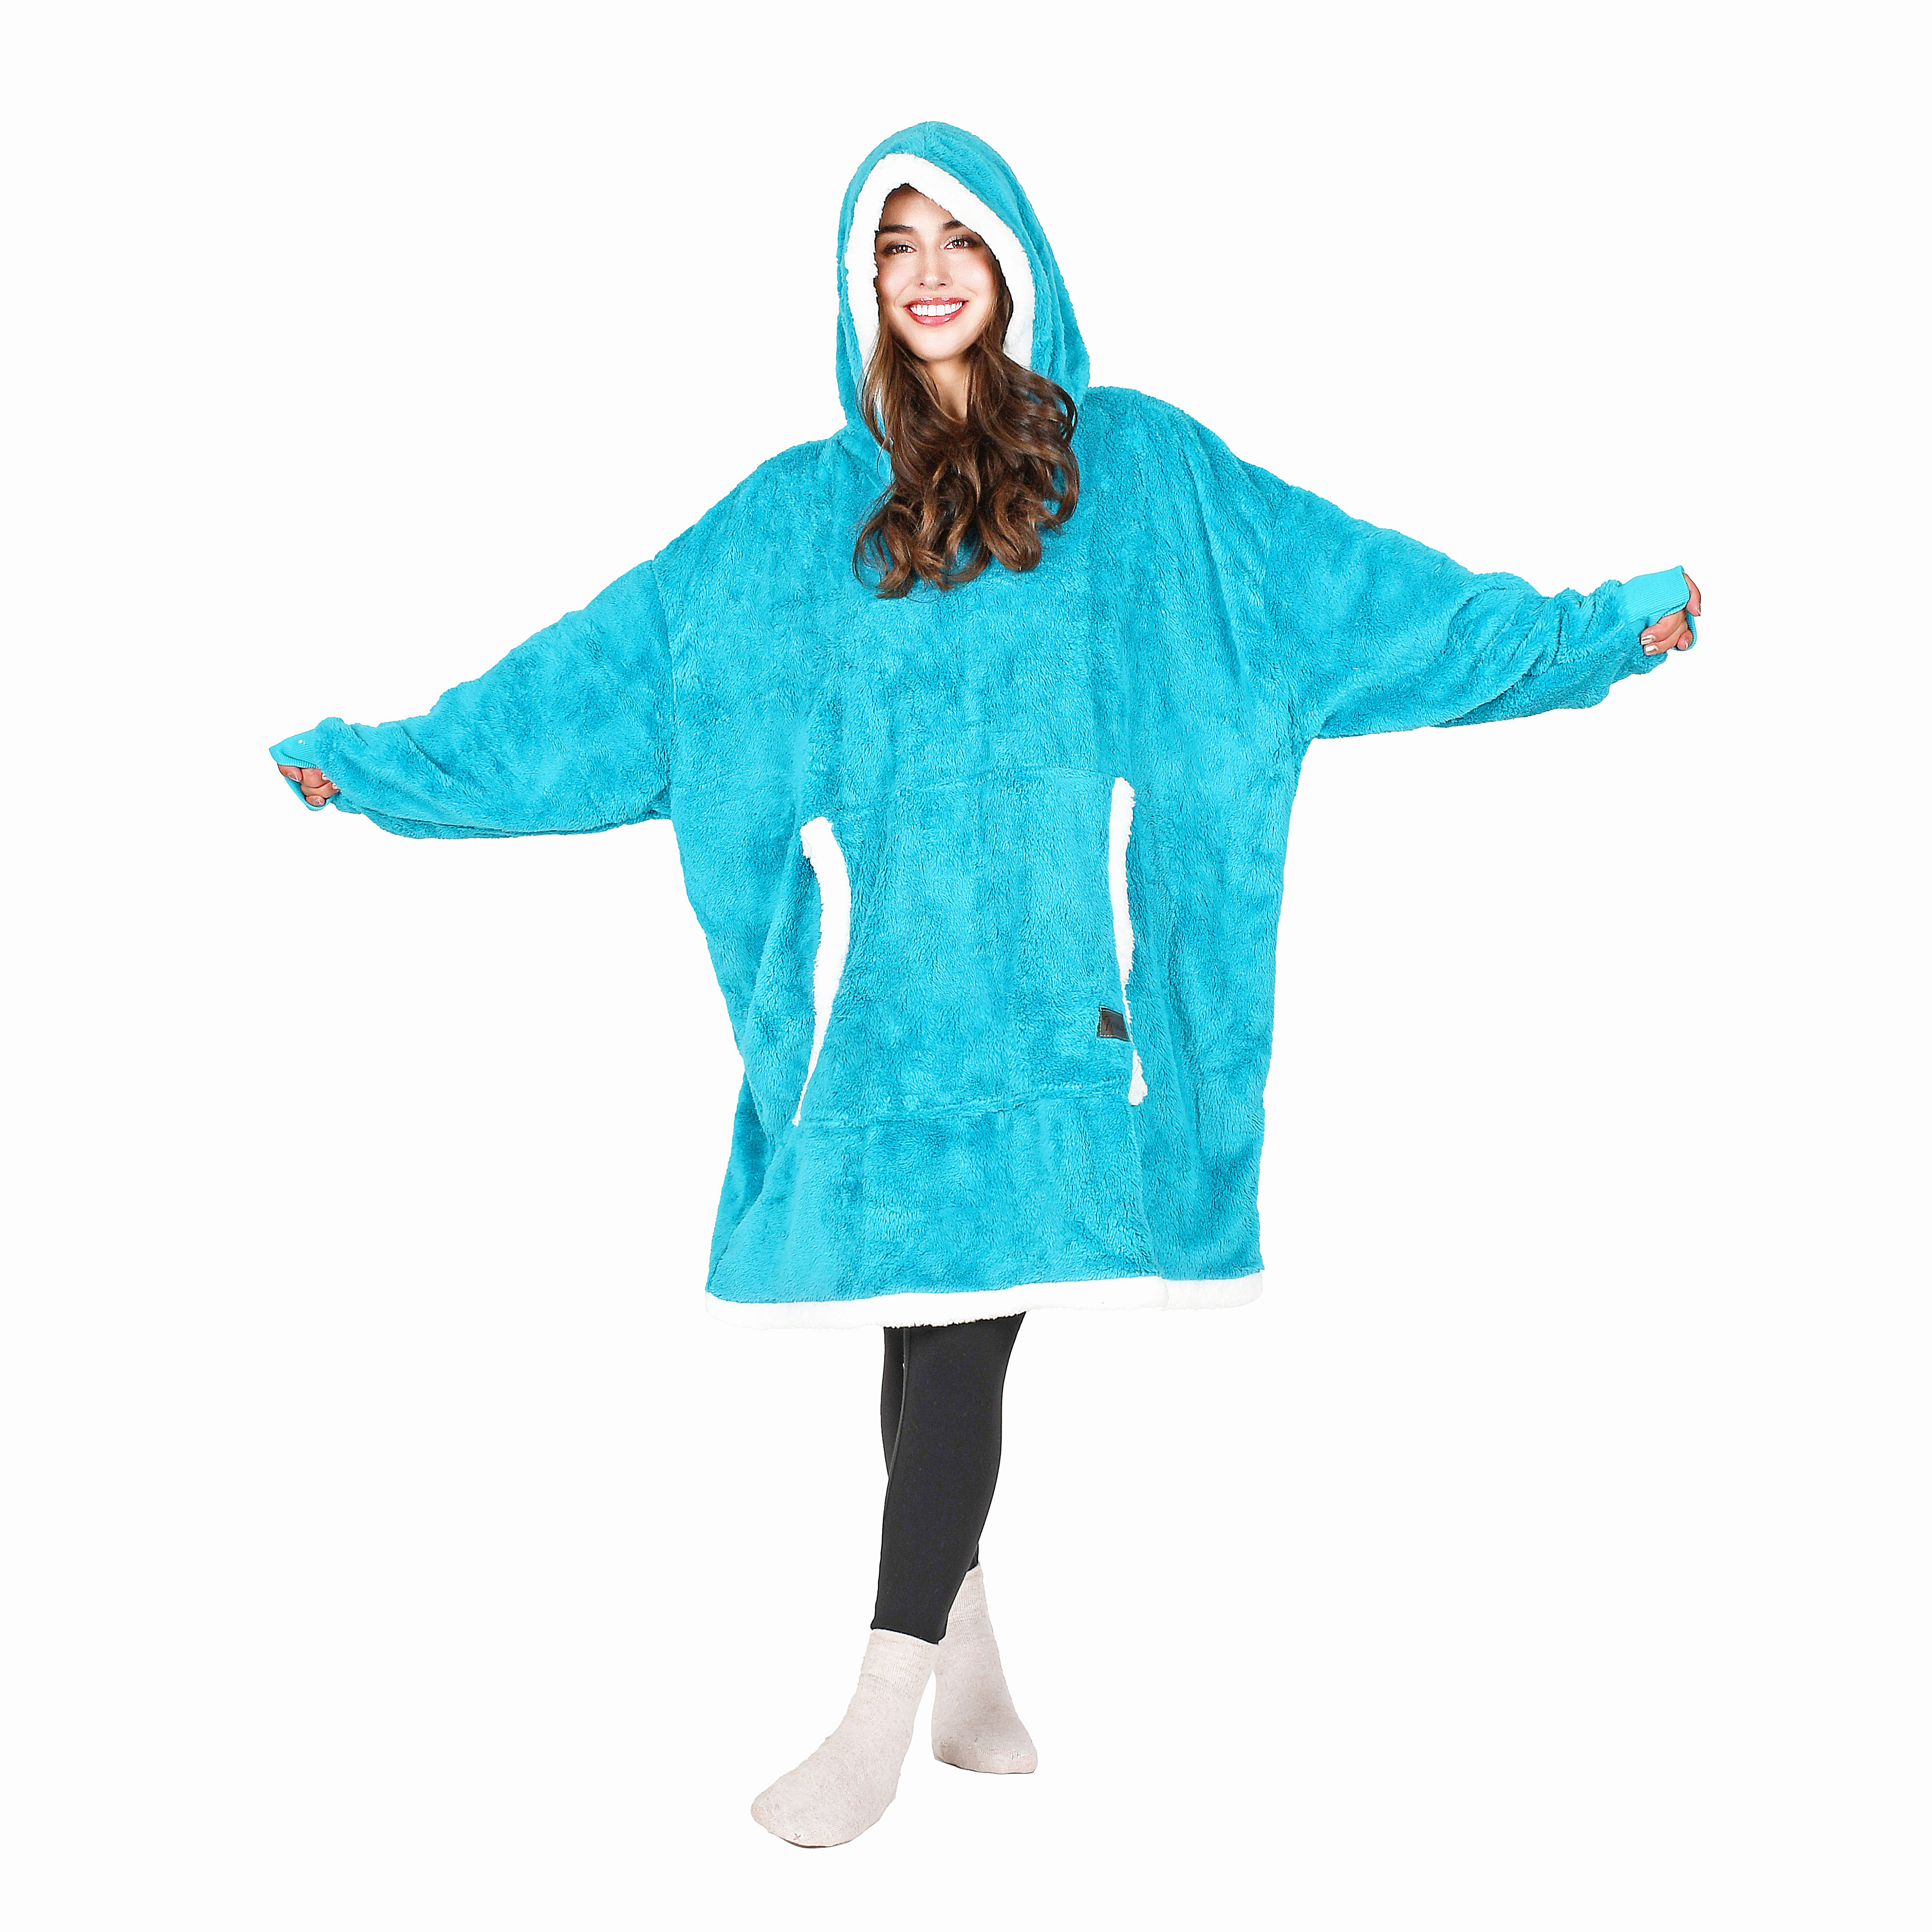 Tirrinia Oversized Wearable Blanket Hoodie Sherpa Fleece for Adults as A  Gift, Big & Warm Blanket Sweatshirt Giant Pocket both Indoors & Outdoors Men  Women Teenagers Wife Girlfriend